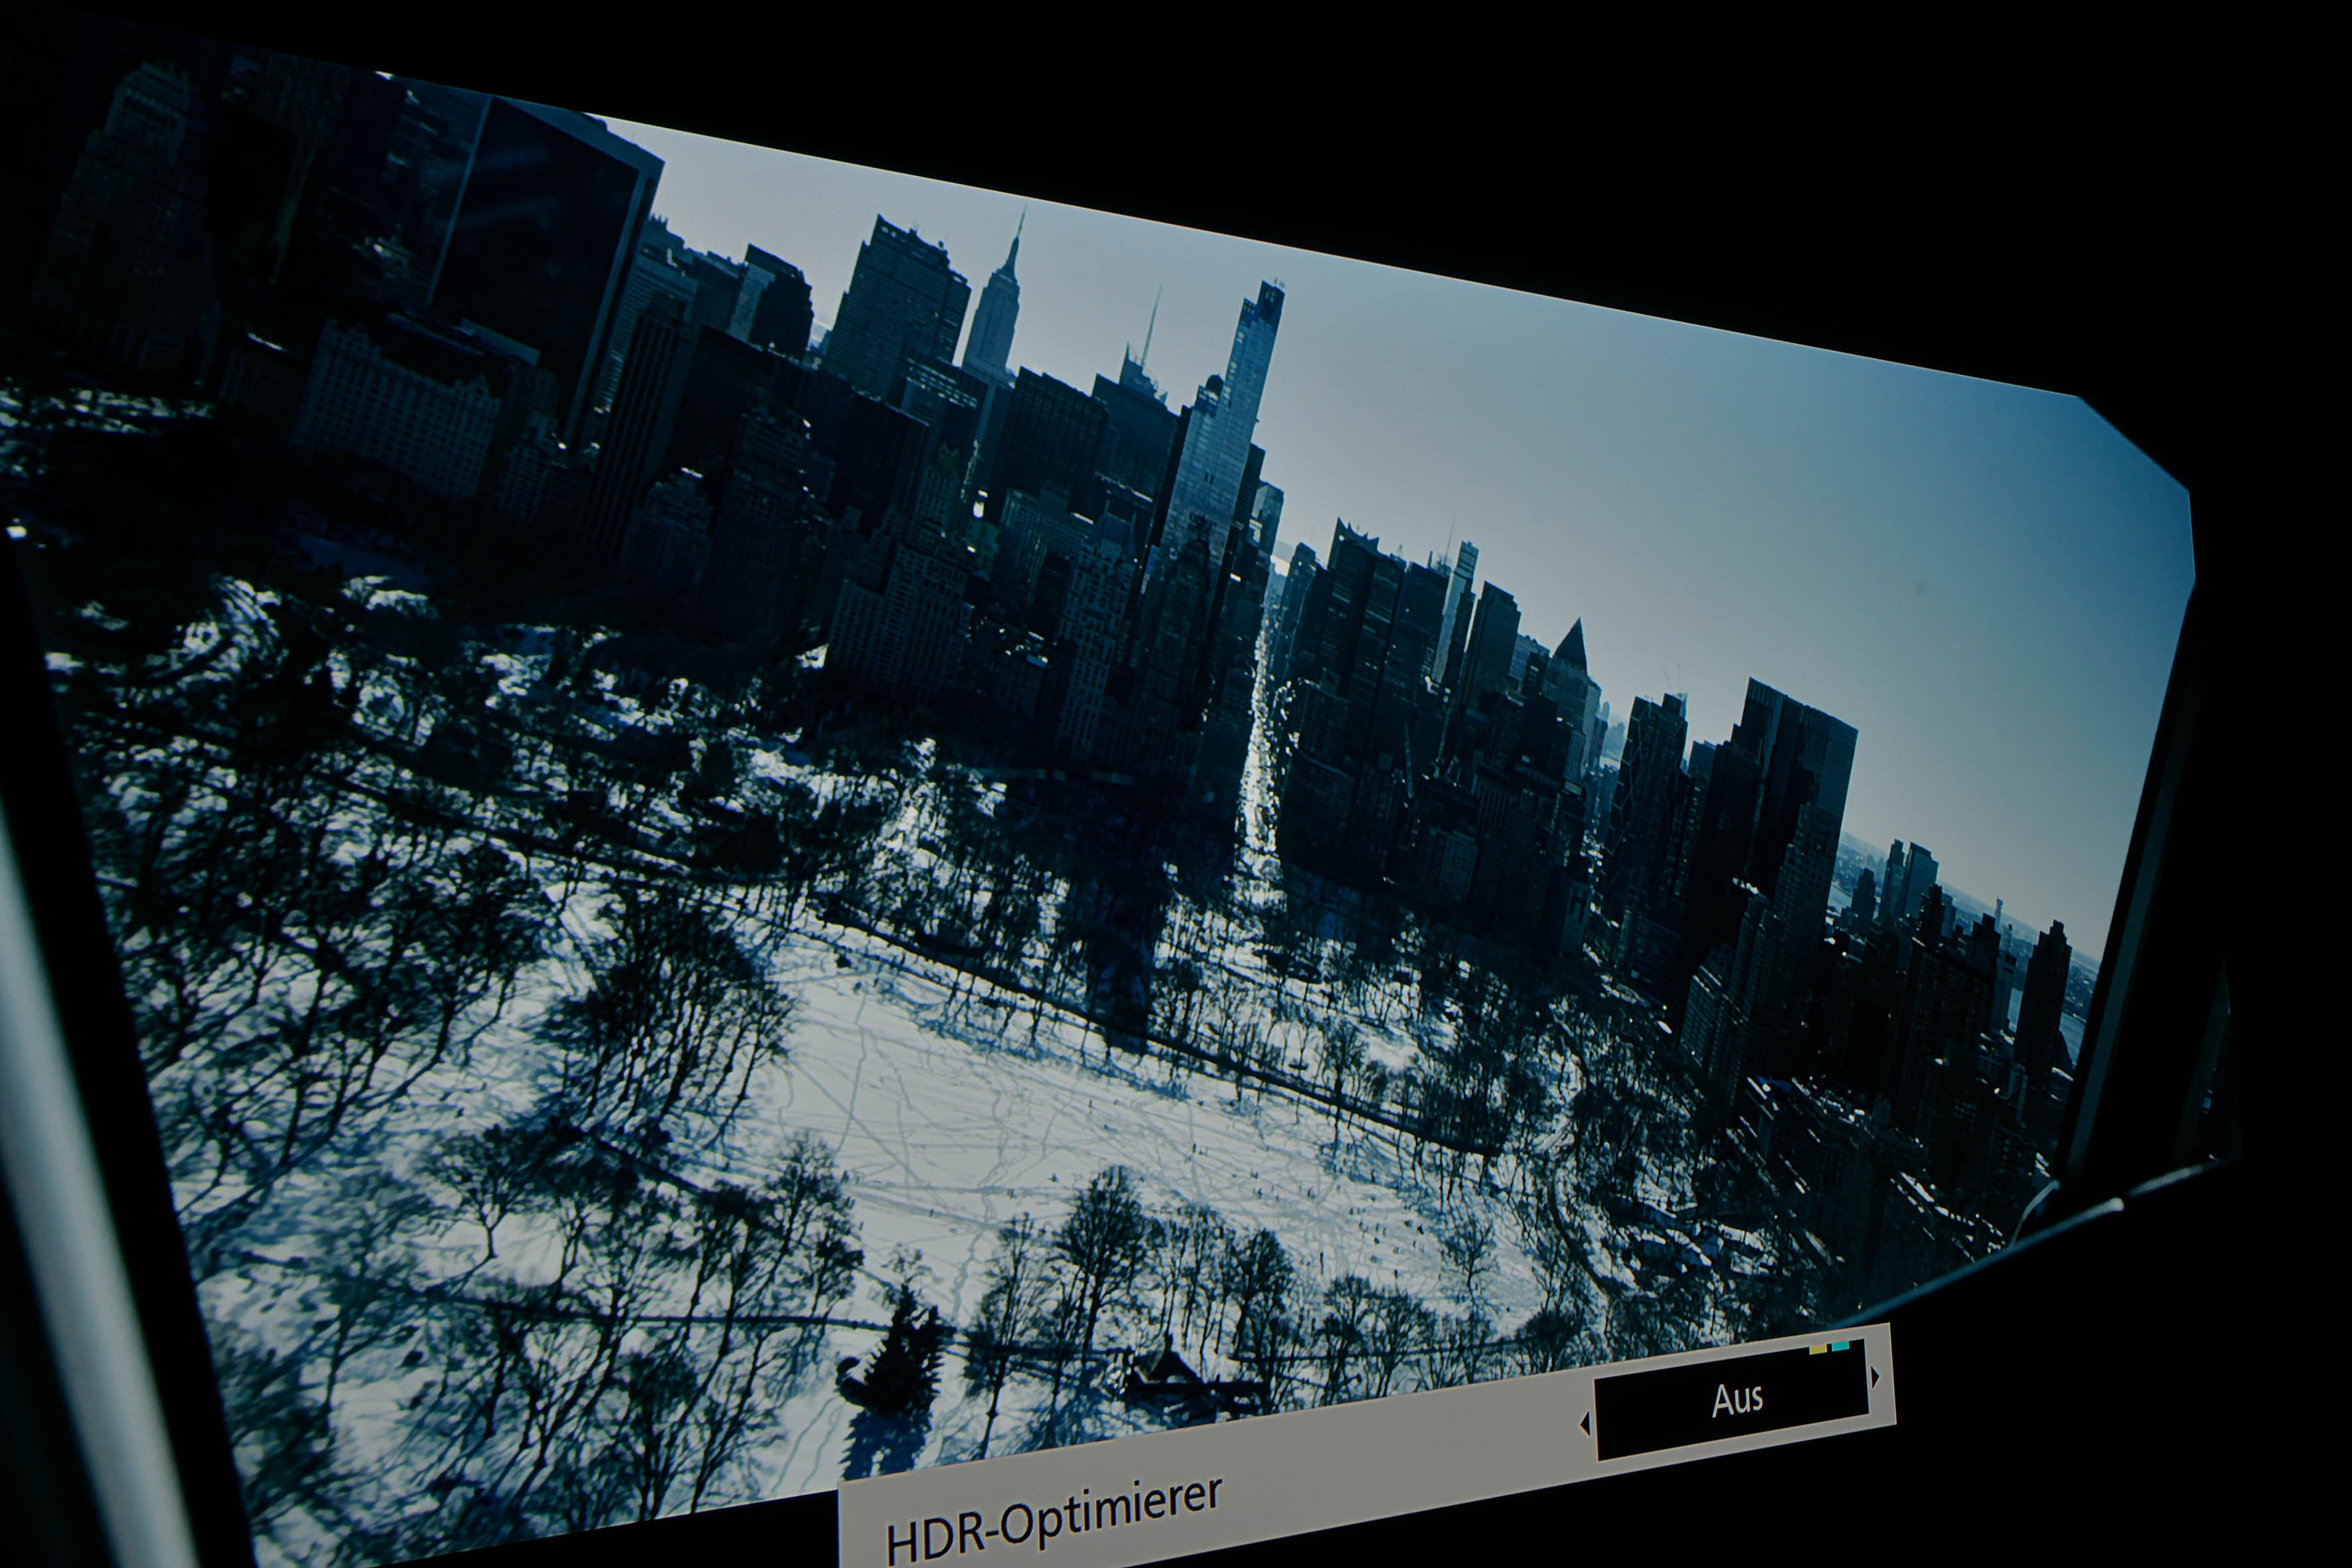 HDR – Screenshot aus dem Film SULLY